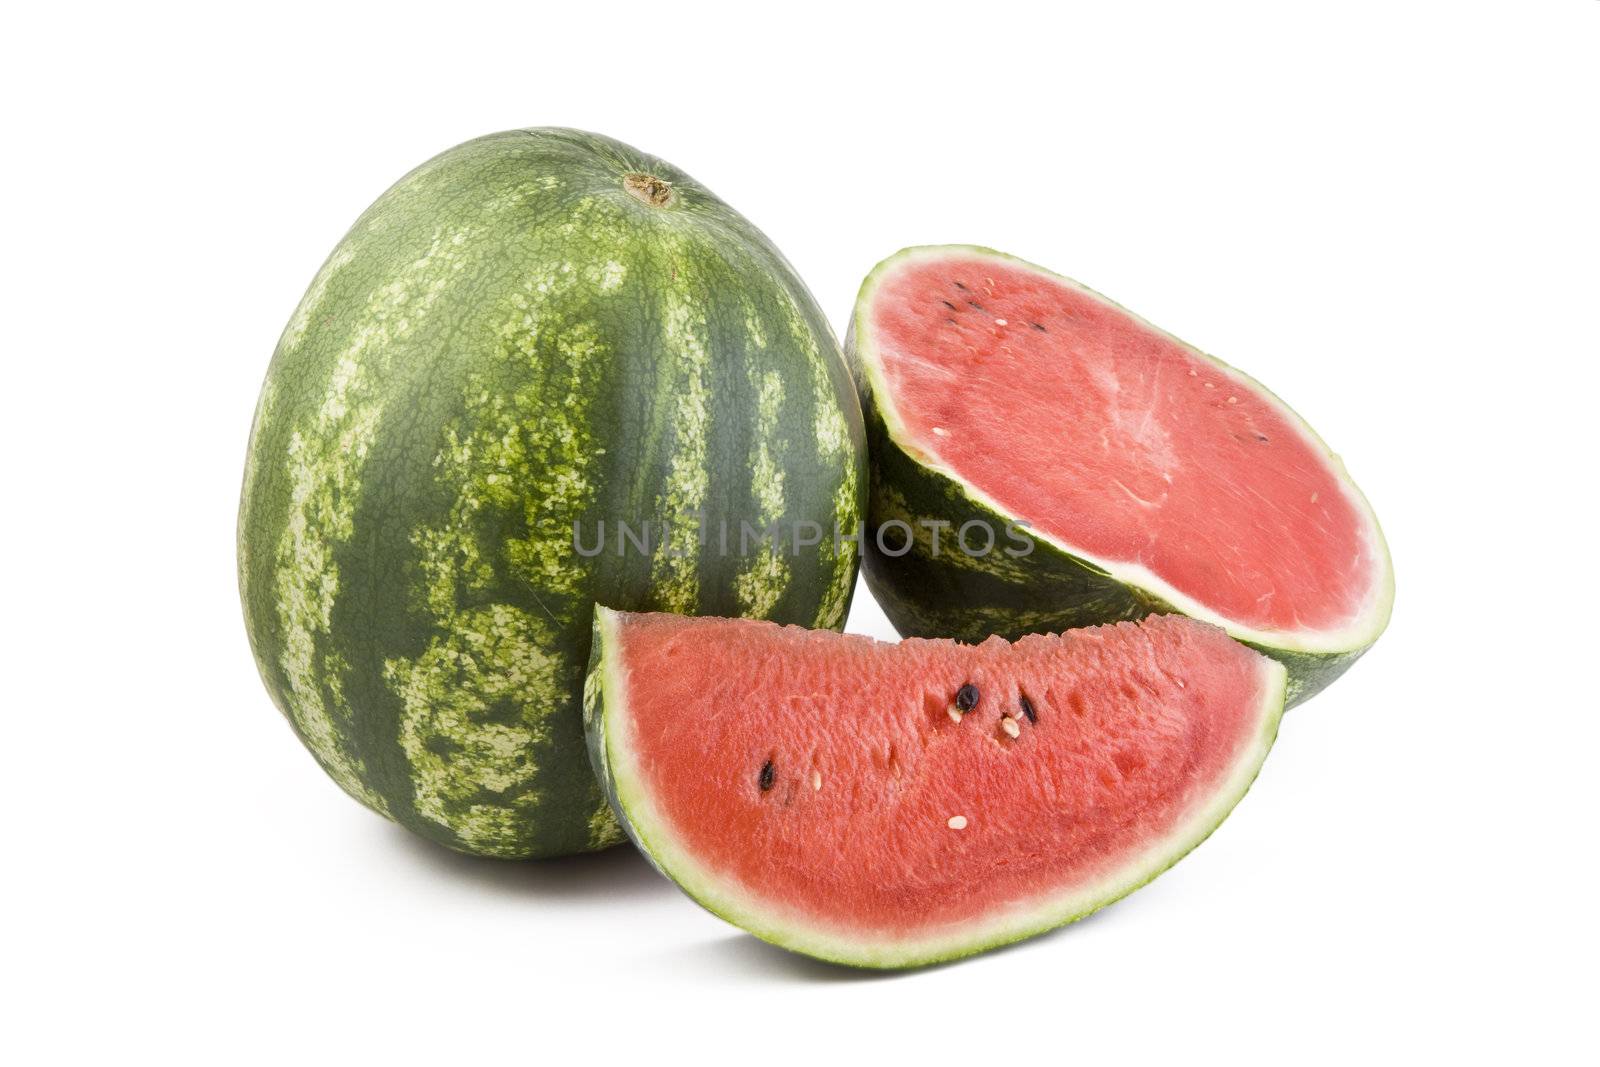 Watermelon by Gbuglok